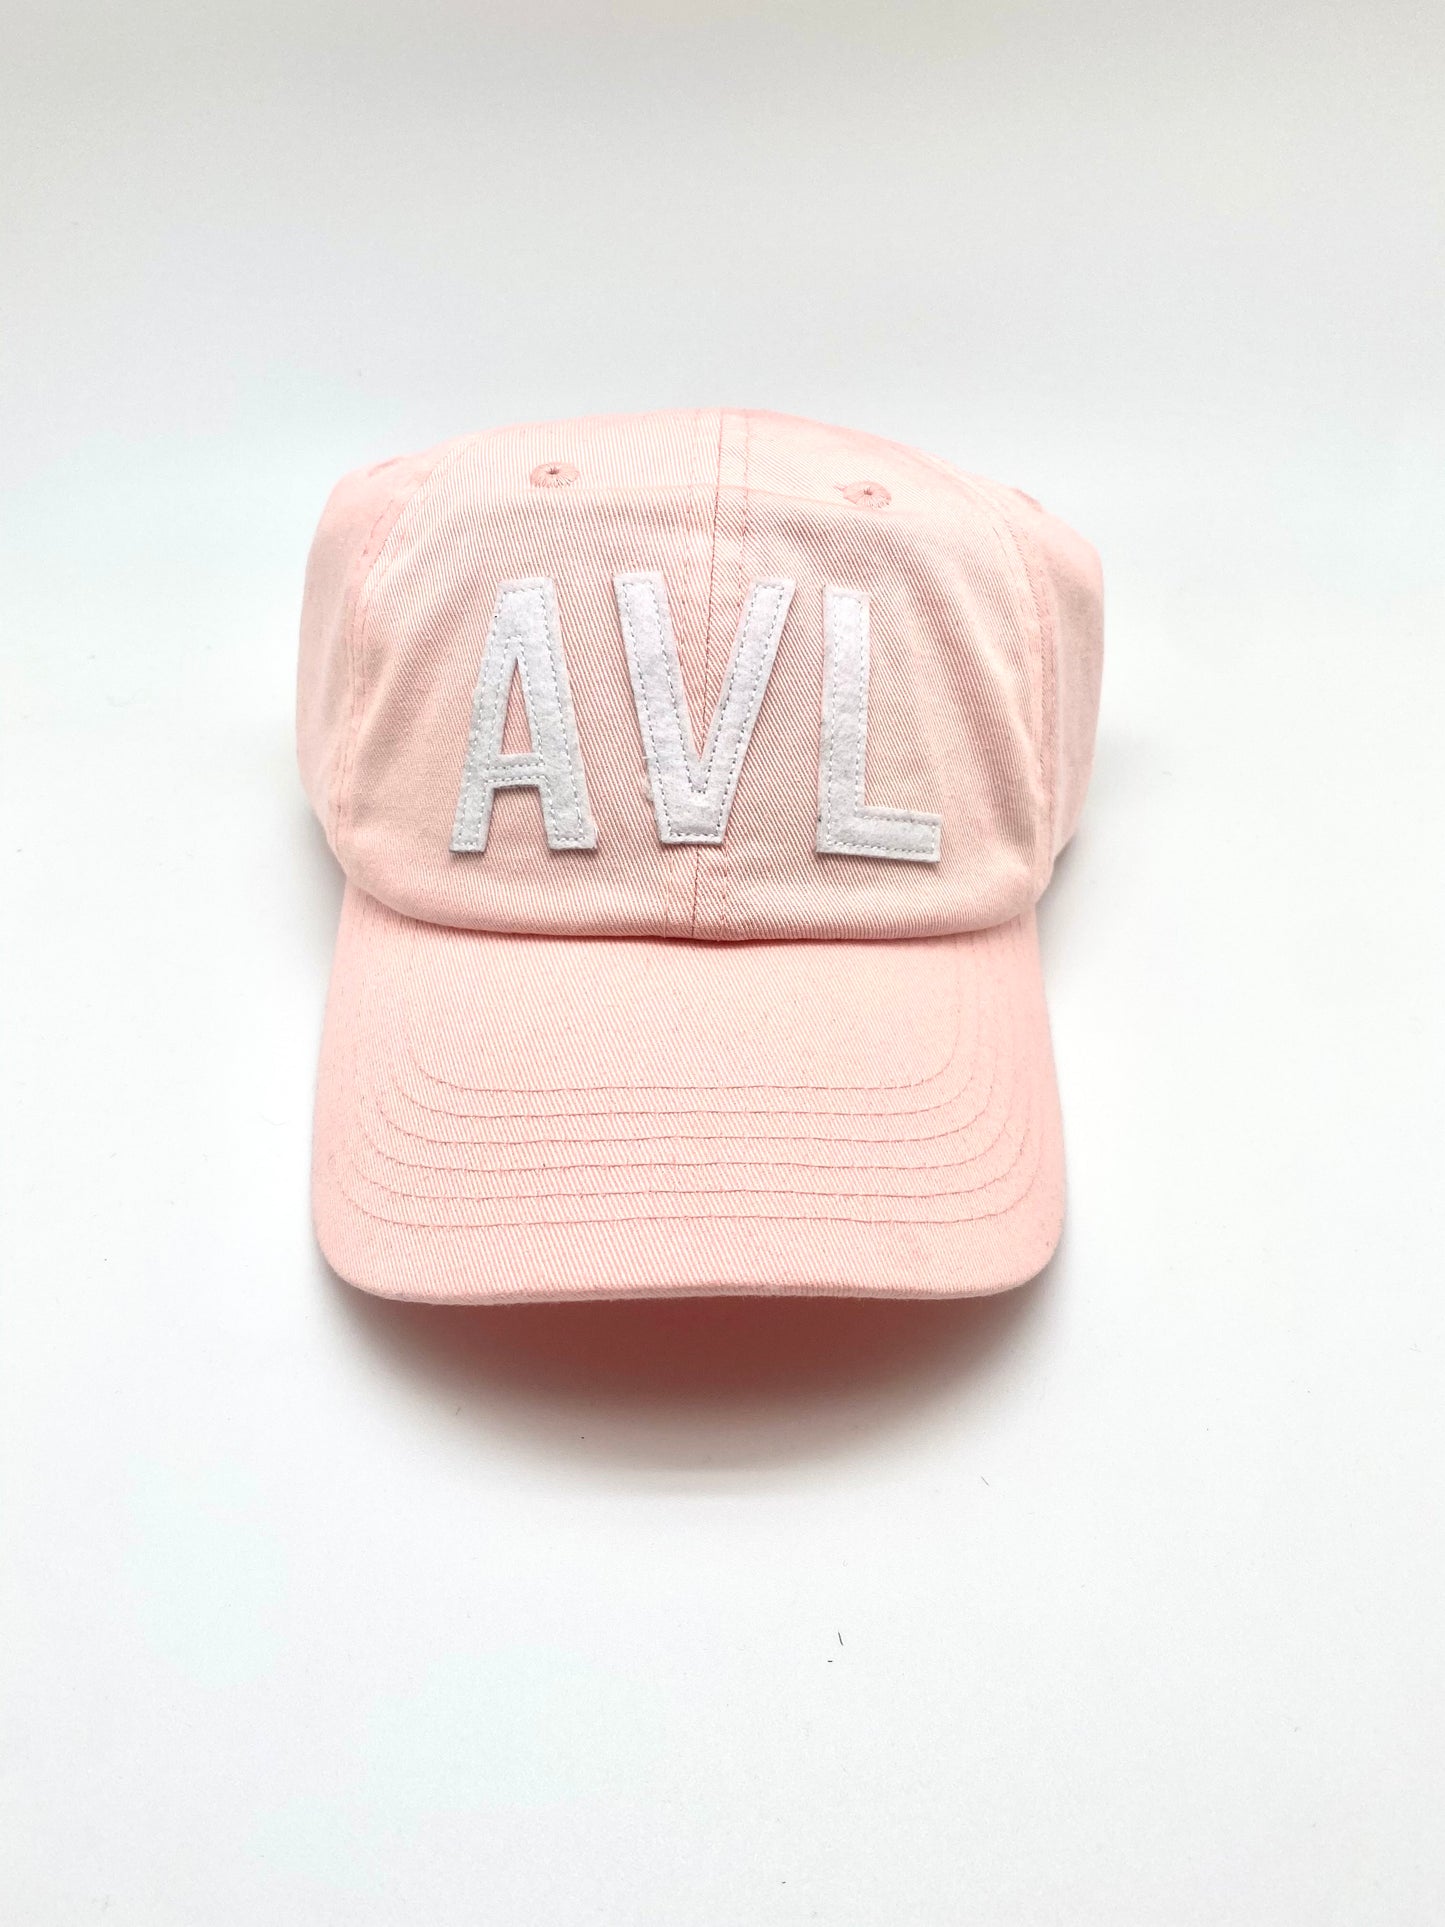 AVL - Asheville, NC Hat